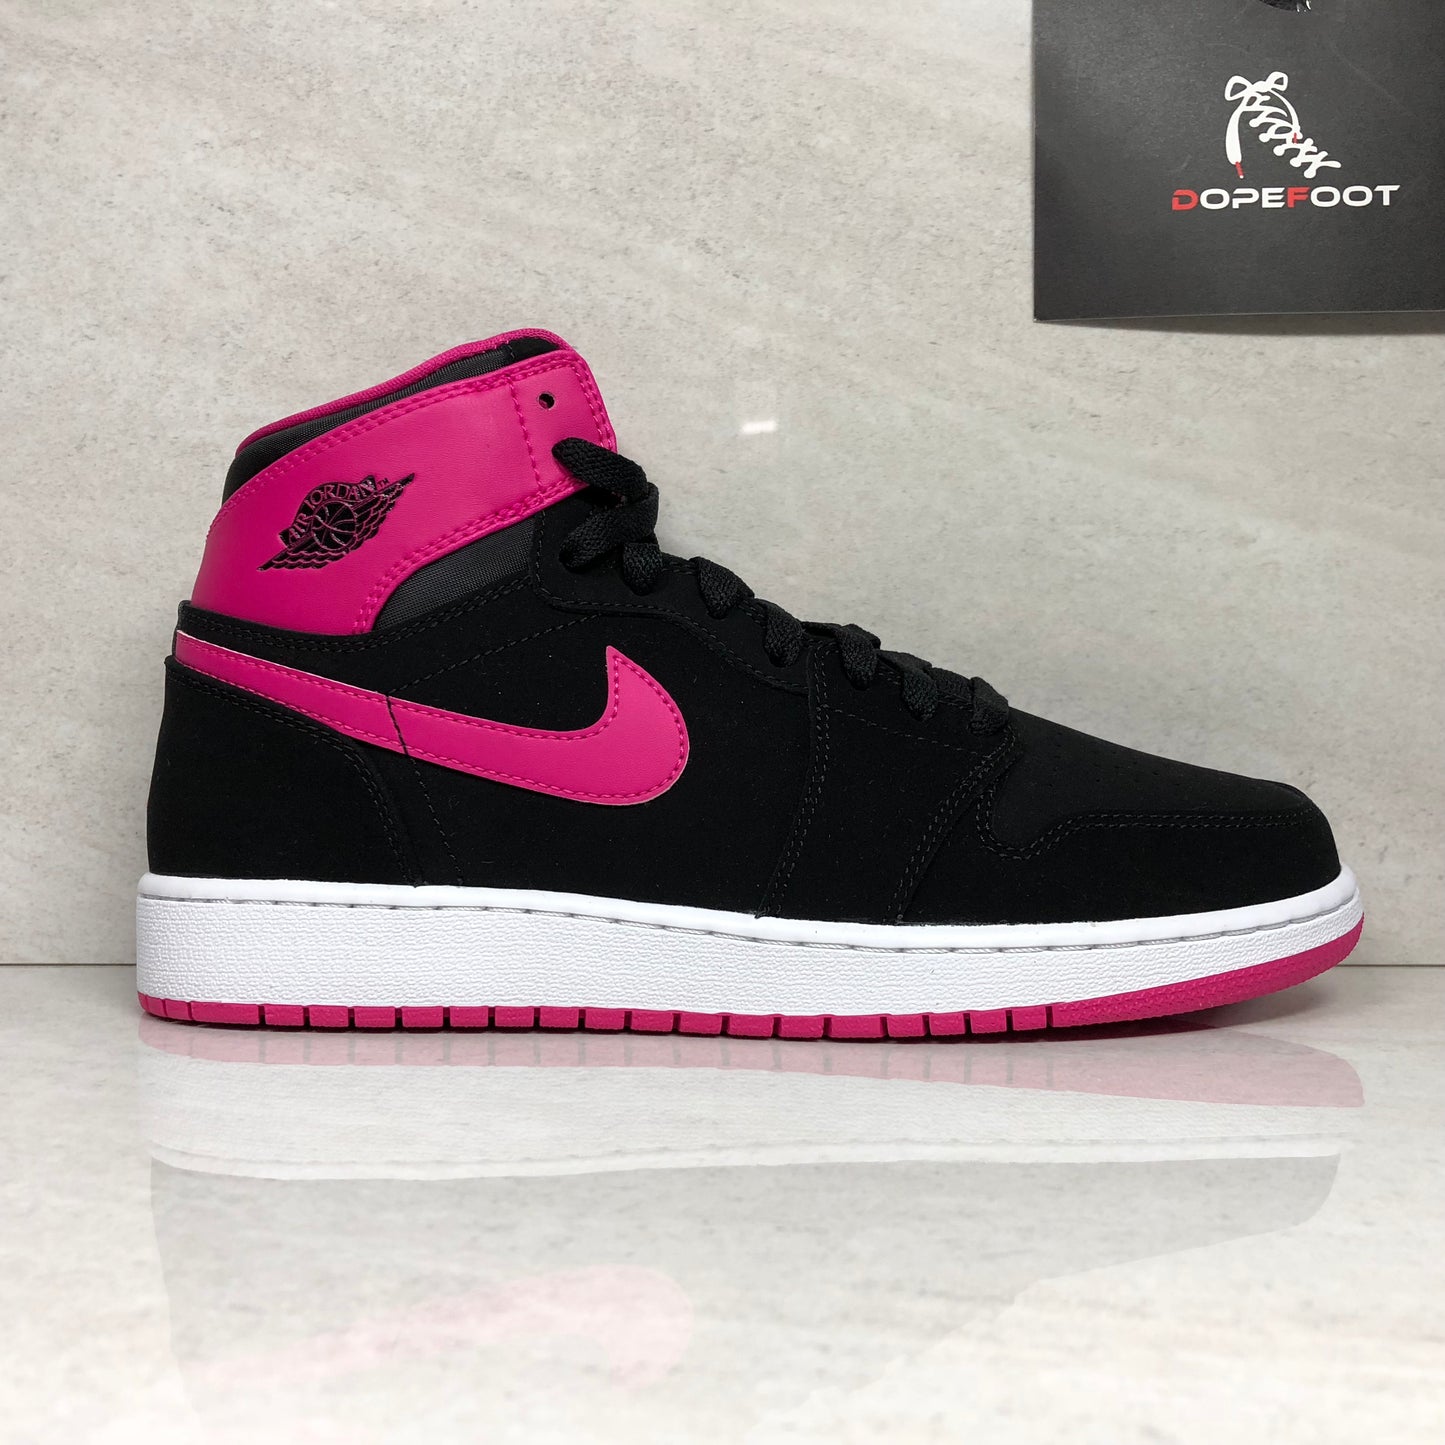 DS Nike Air Jordan 1 Retro High GG Taille 8Y/8.5Y Noir/Vivid Rose 332148 008